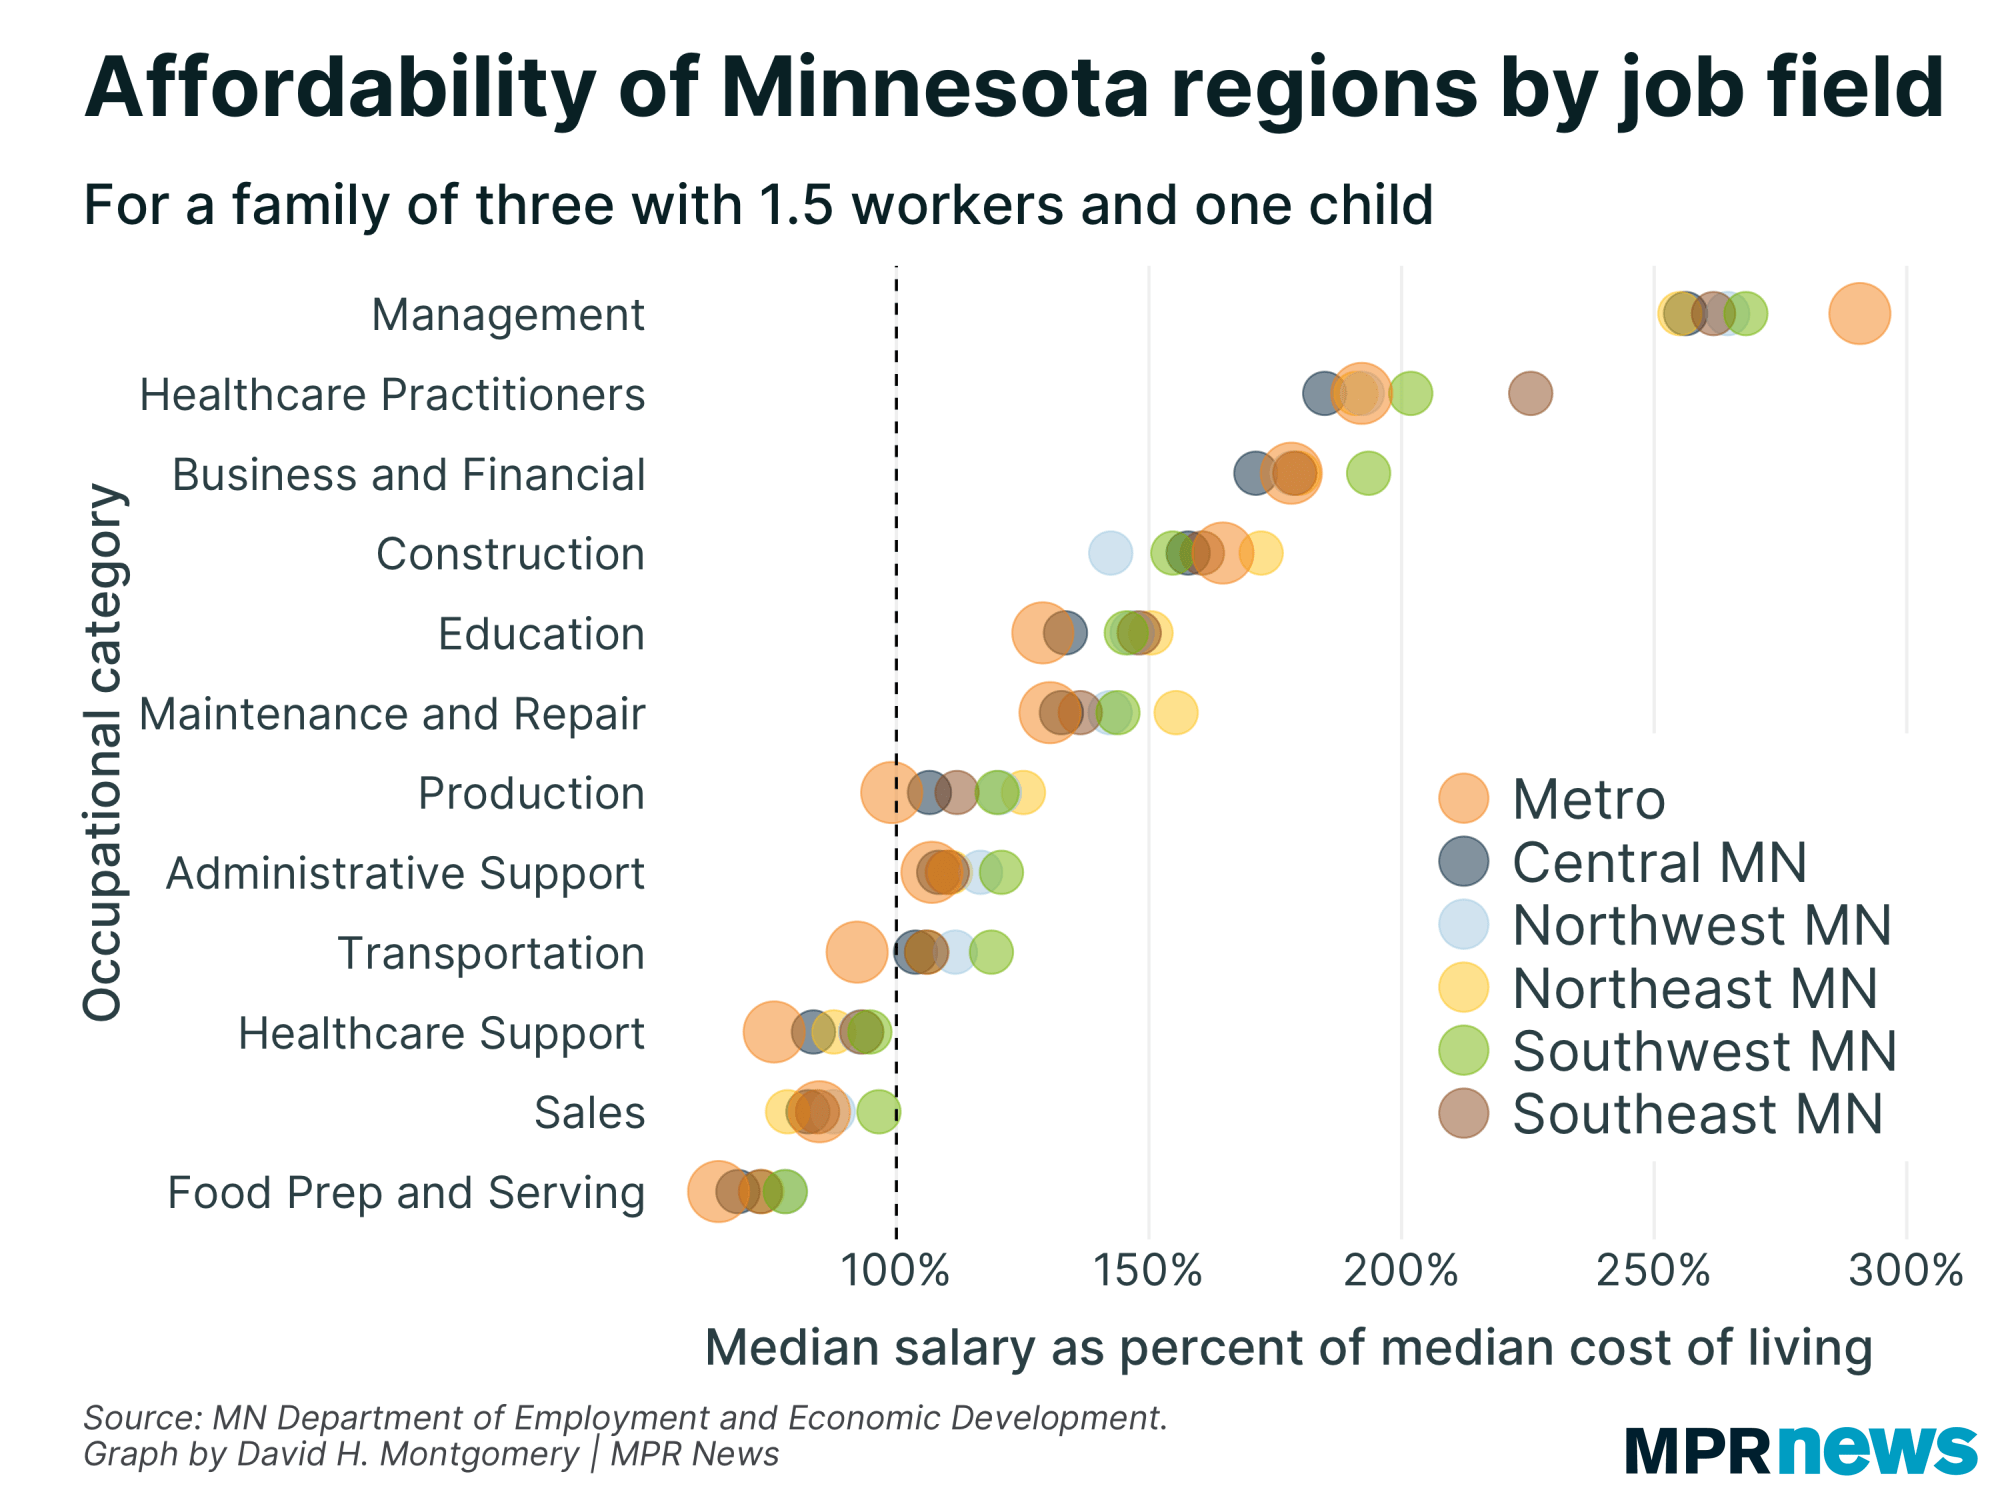 Graphic: Affordability of Minnesota regions by job field